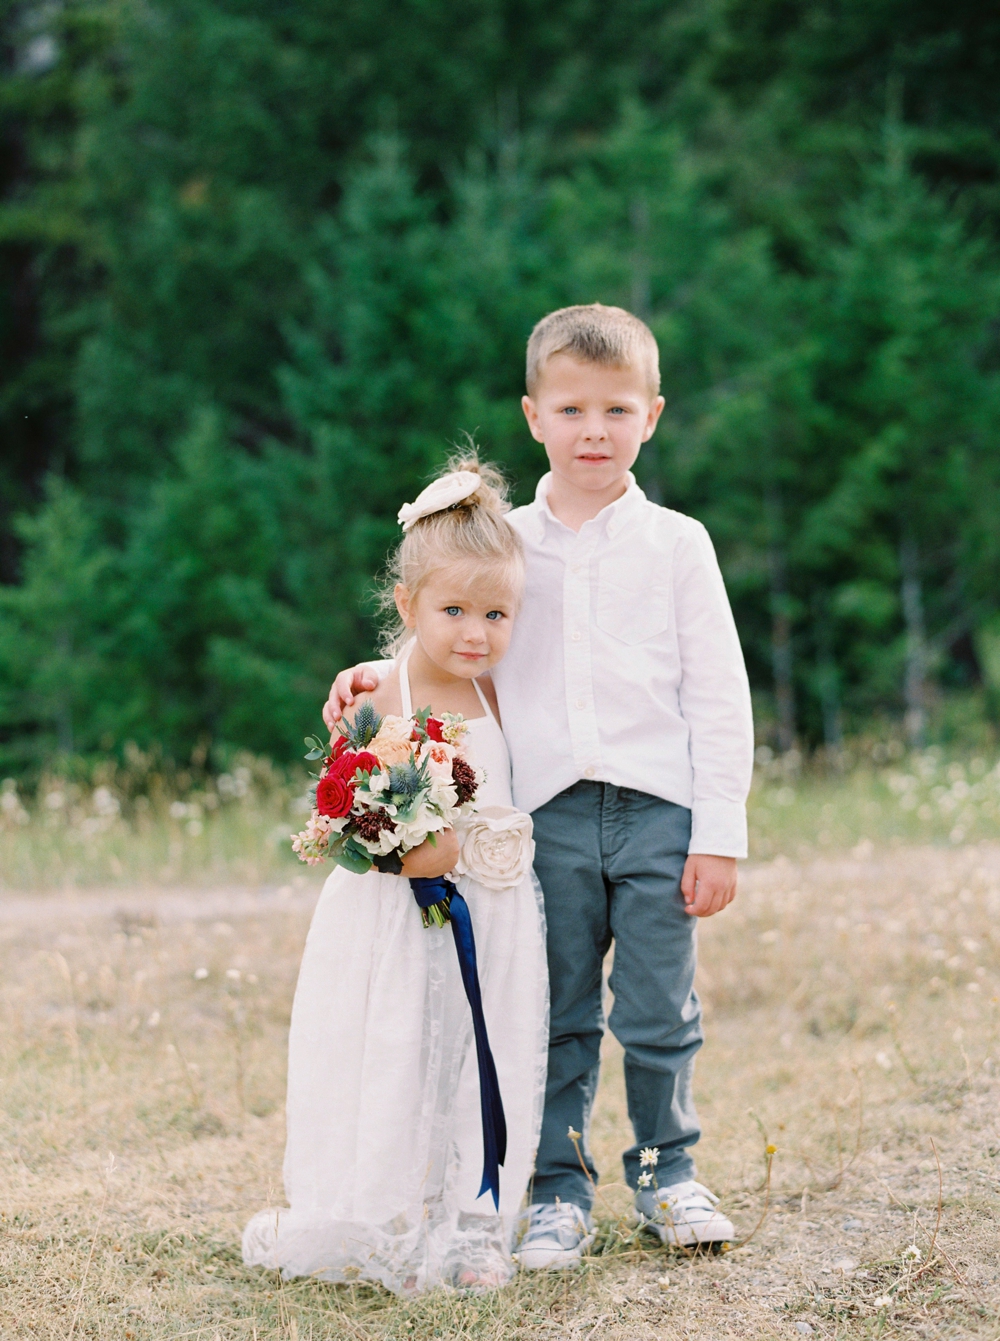 Banff Wedding Photographers | Banff tunnel mountain reservoir | wedding ceremony decor brightly colored florals | flower girl and ring bearer | Justine Milton fine art film photographers